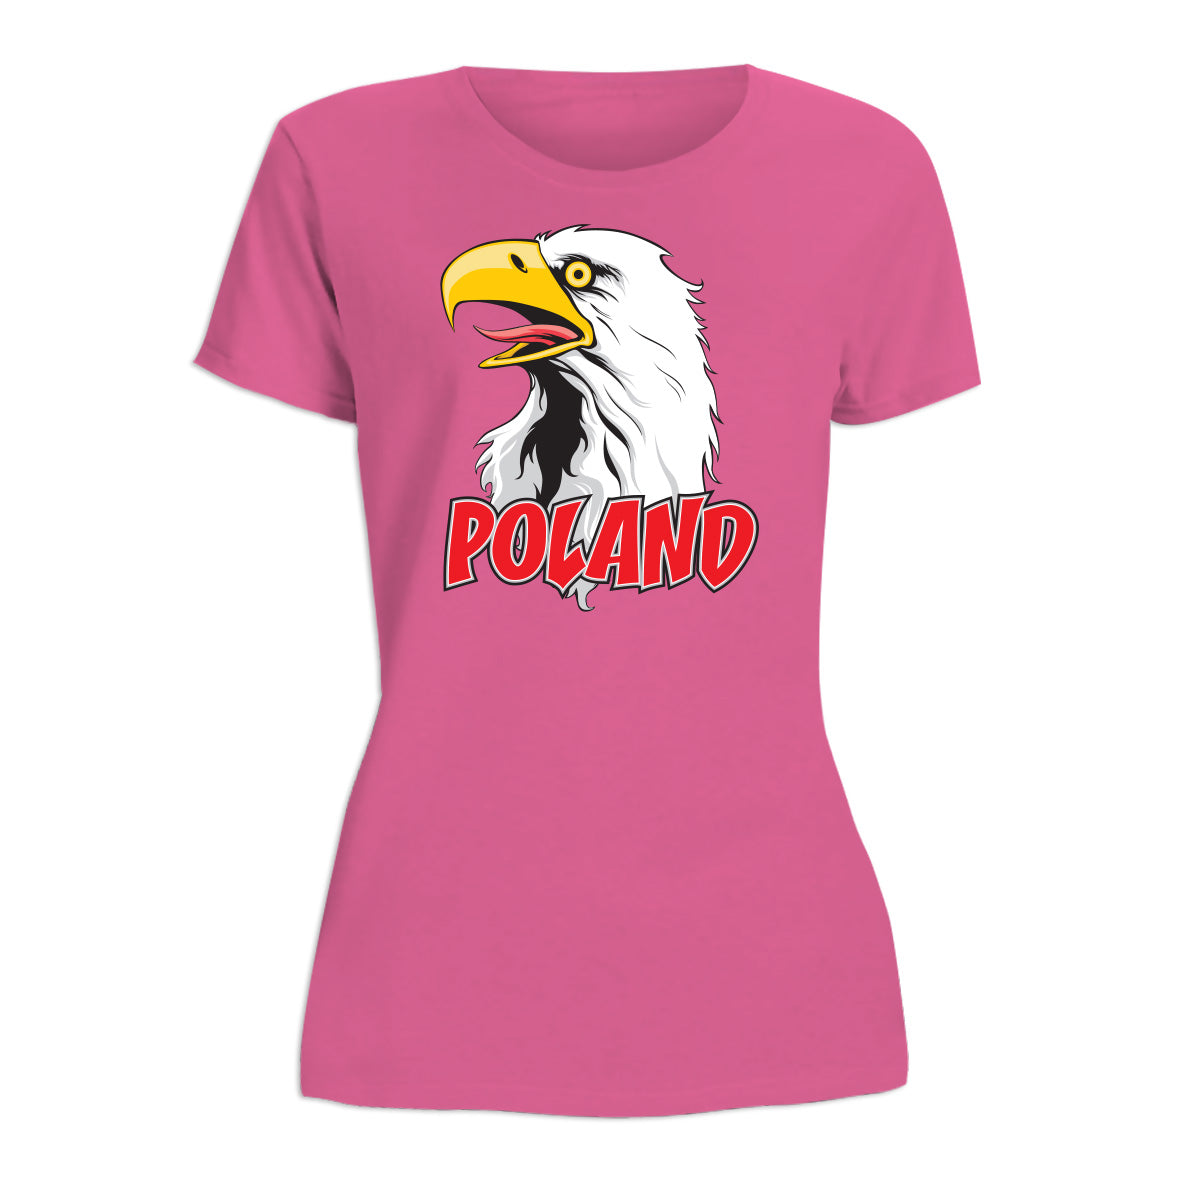 Poland Eagle Women's Short Sleeve Tshirt